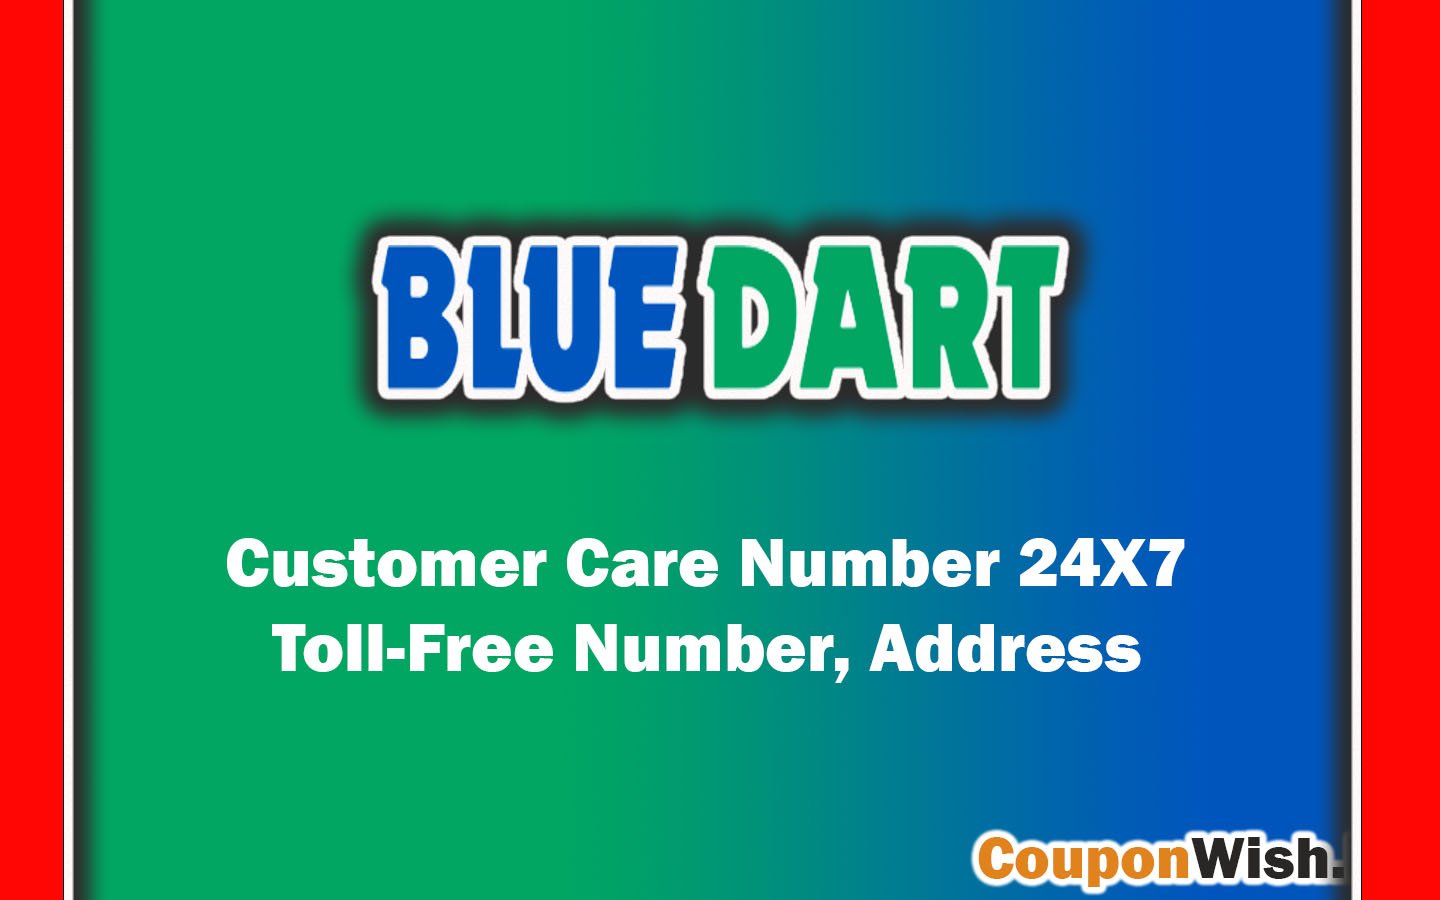 Blue dart customer care number 24X7 Toll-Free Number, Address